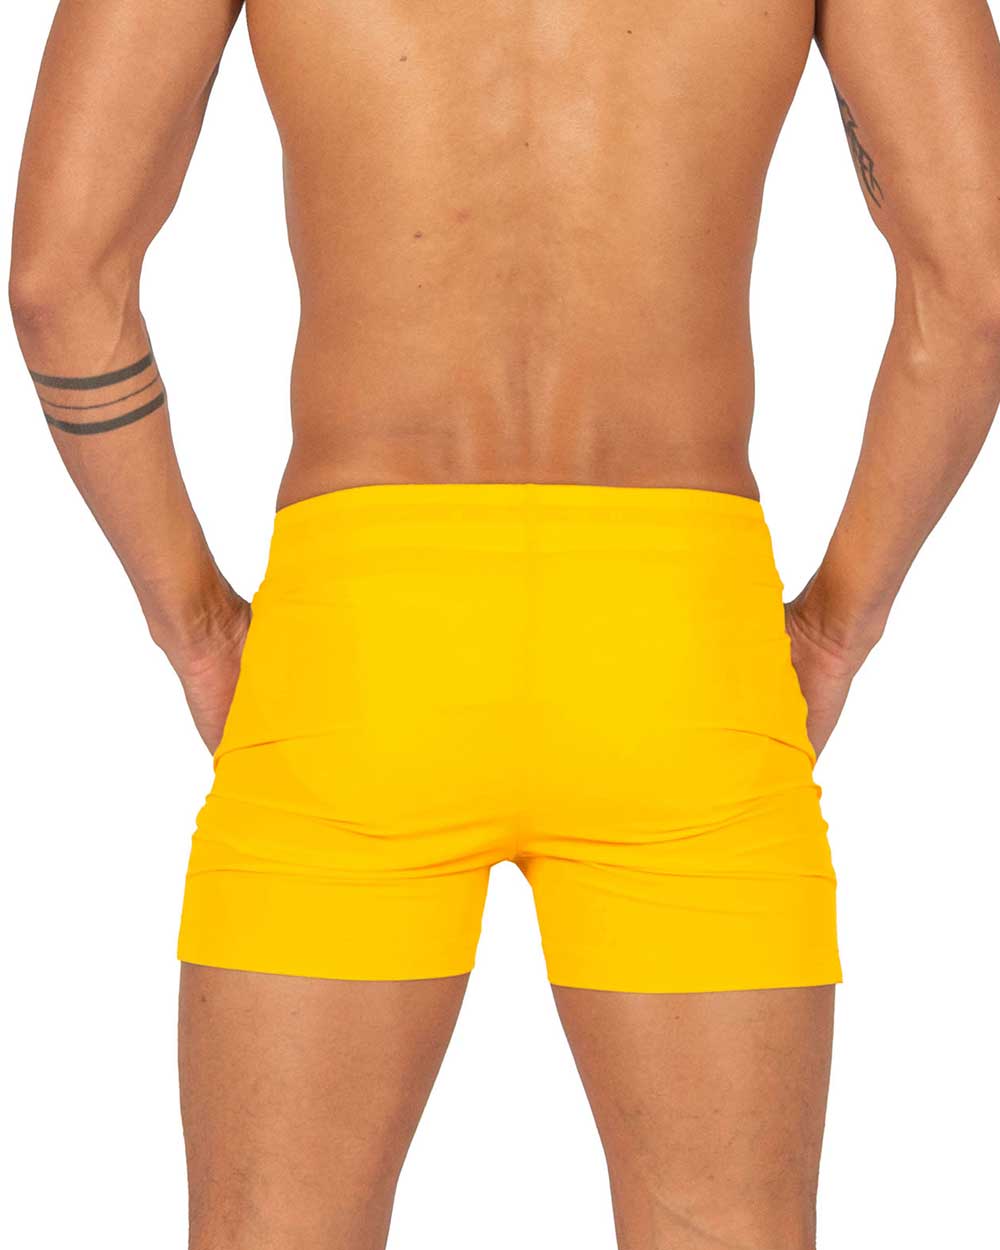 Muscle Shorts-Beach Yellow [4465]